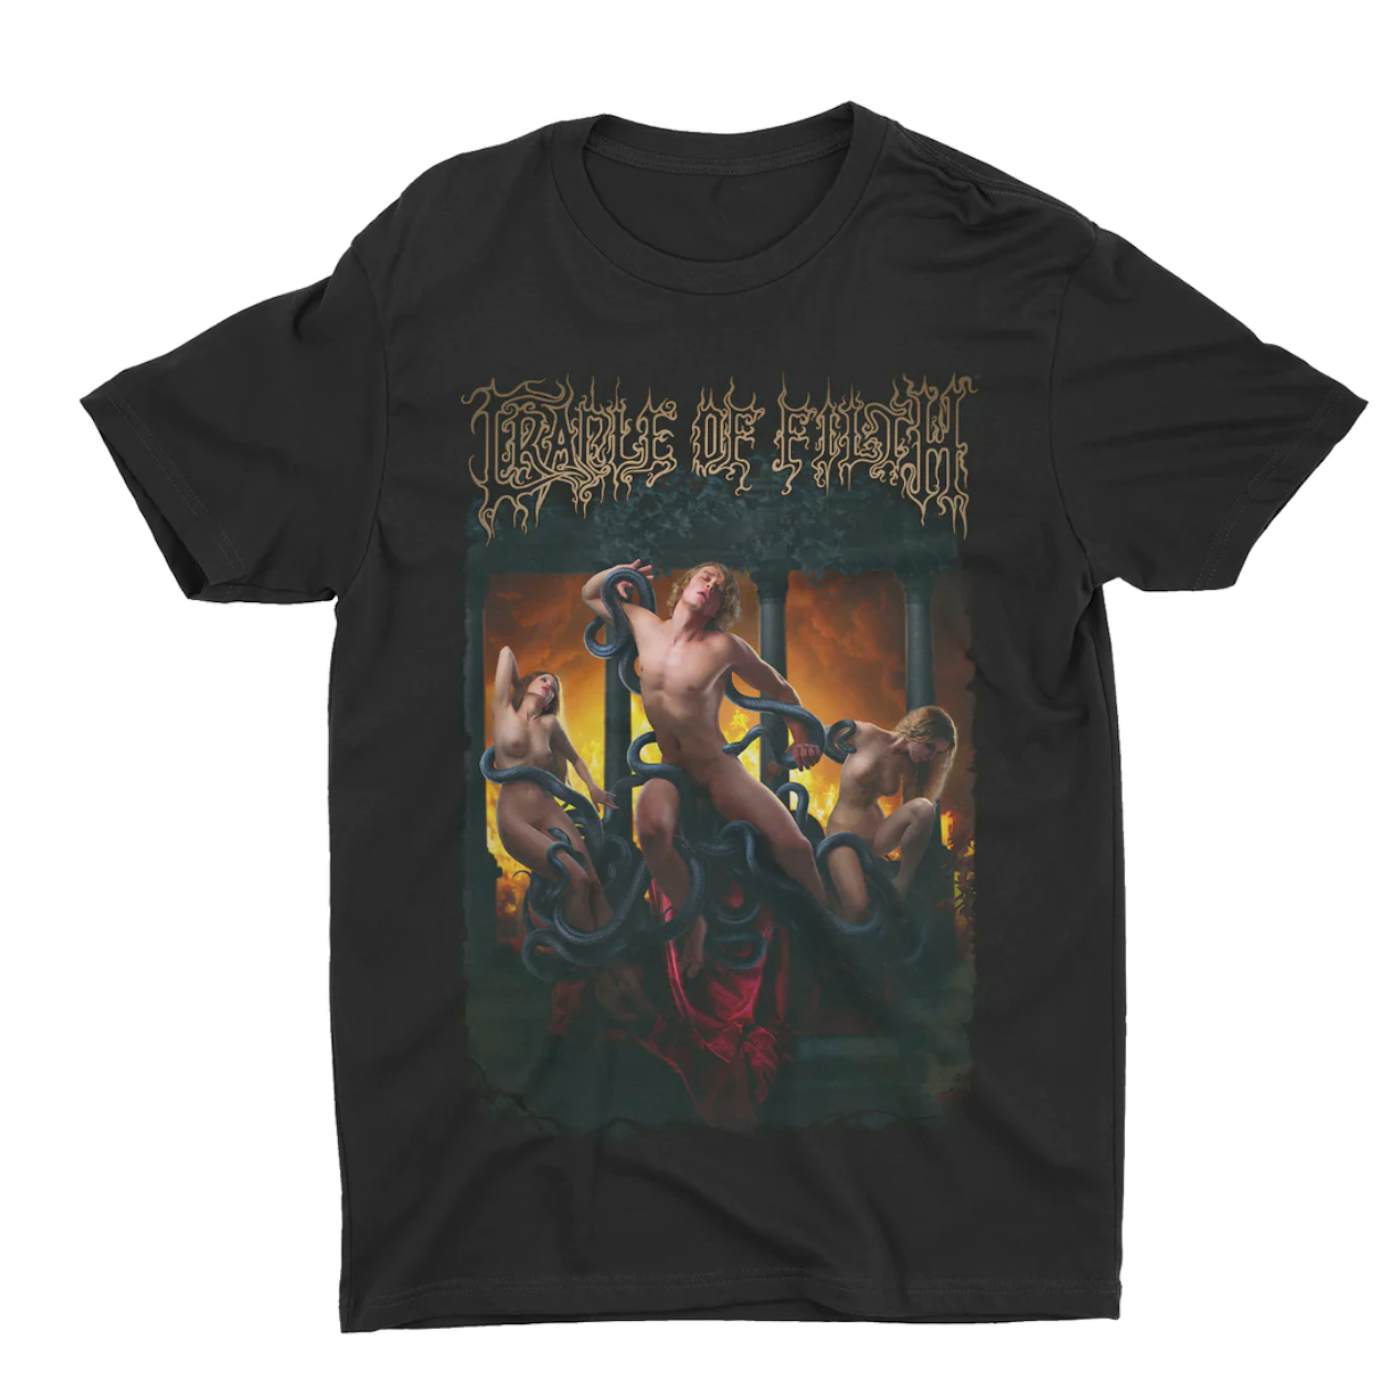 Cradle Of Filth "Crawling King Chaos" T-Shirt